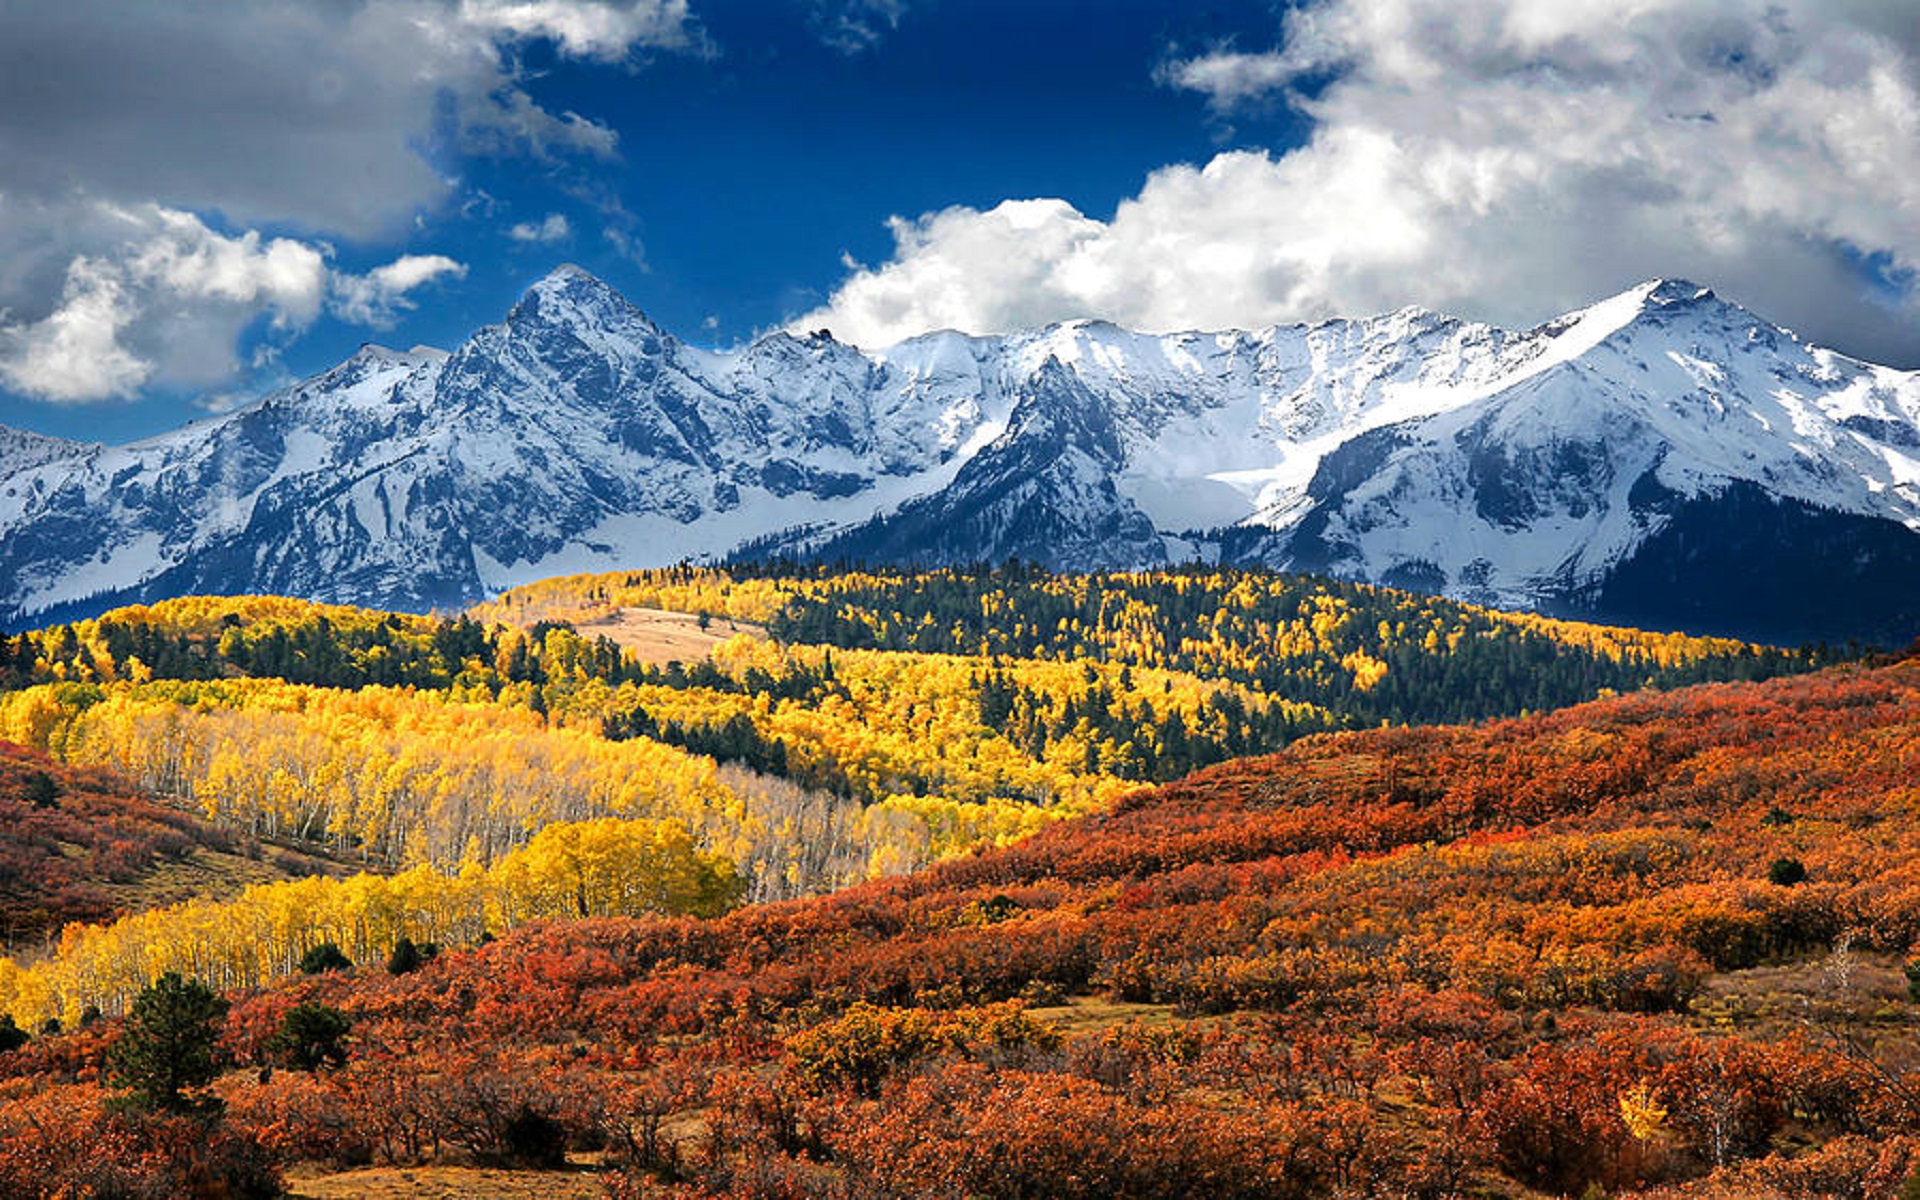 Colorado Images Download Free Pixelstalknet